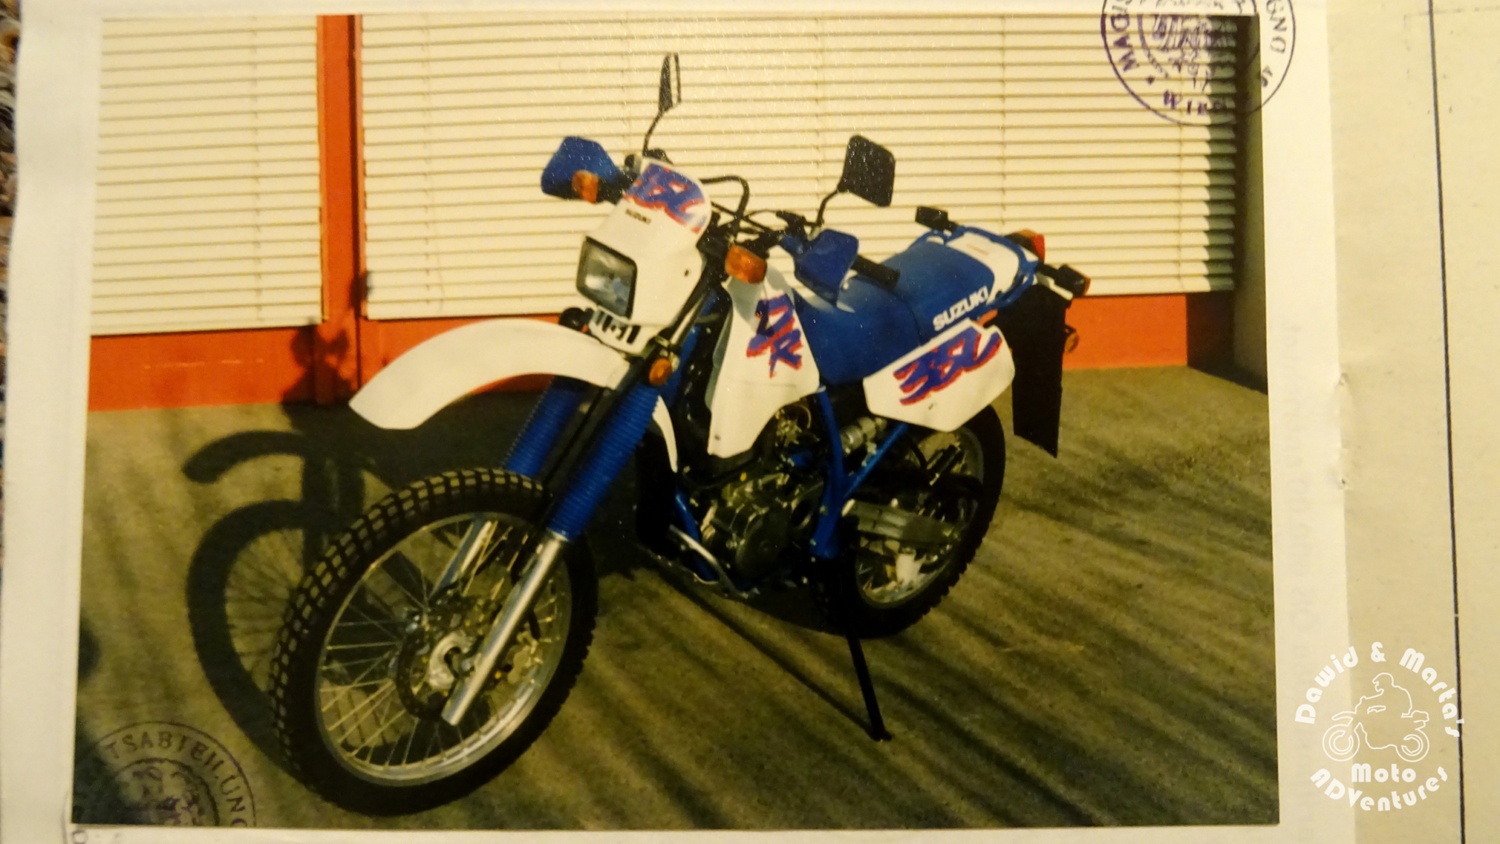 Marta Dr350 in 1994